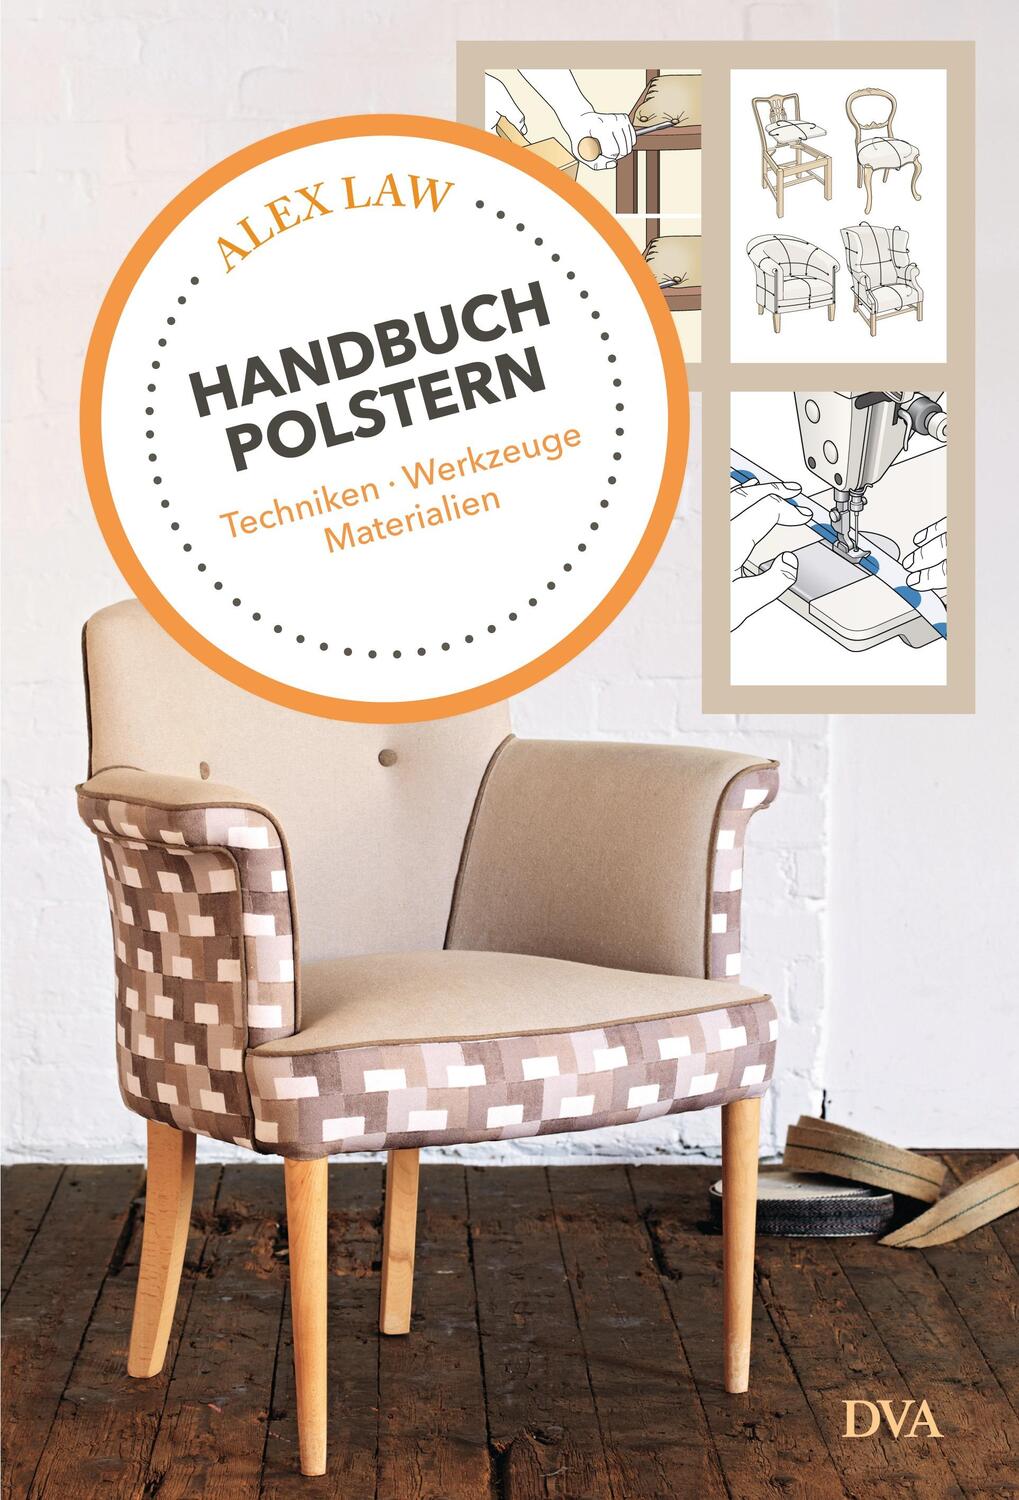 Cover: 9783421040275 | Handbuch Polstern | Techniken, Werkzeuge, Materialien | Alex Law | DVA